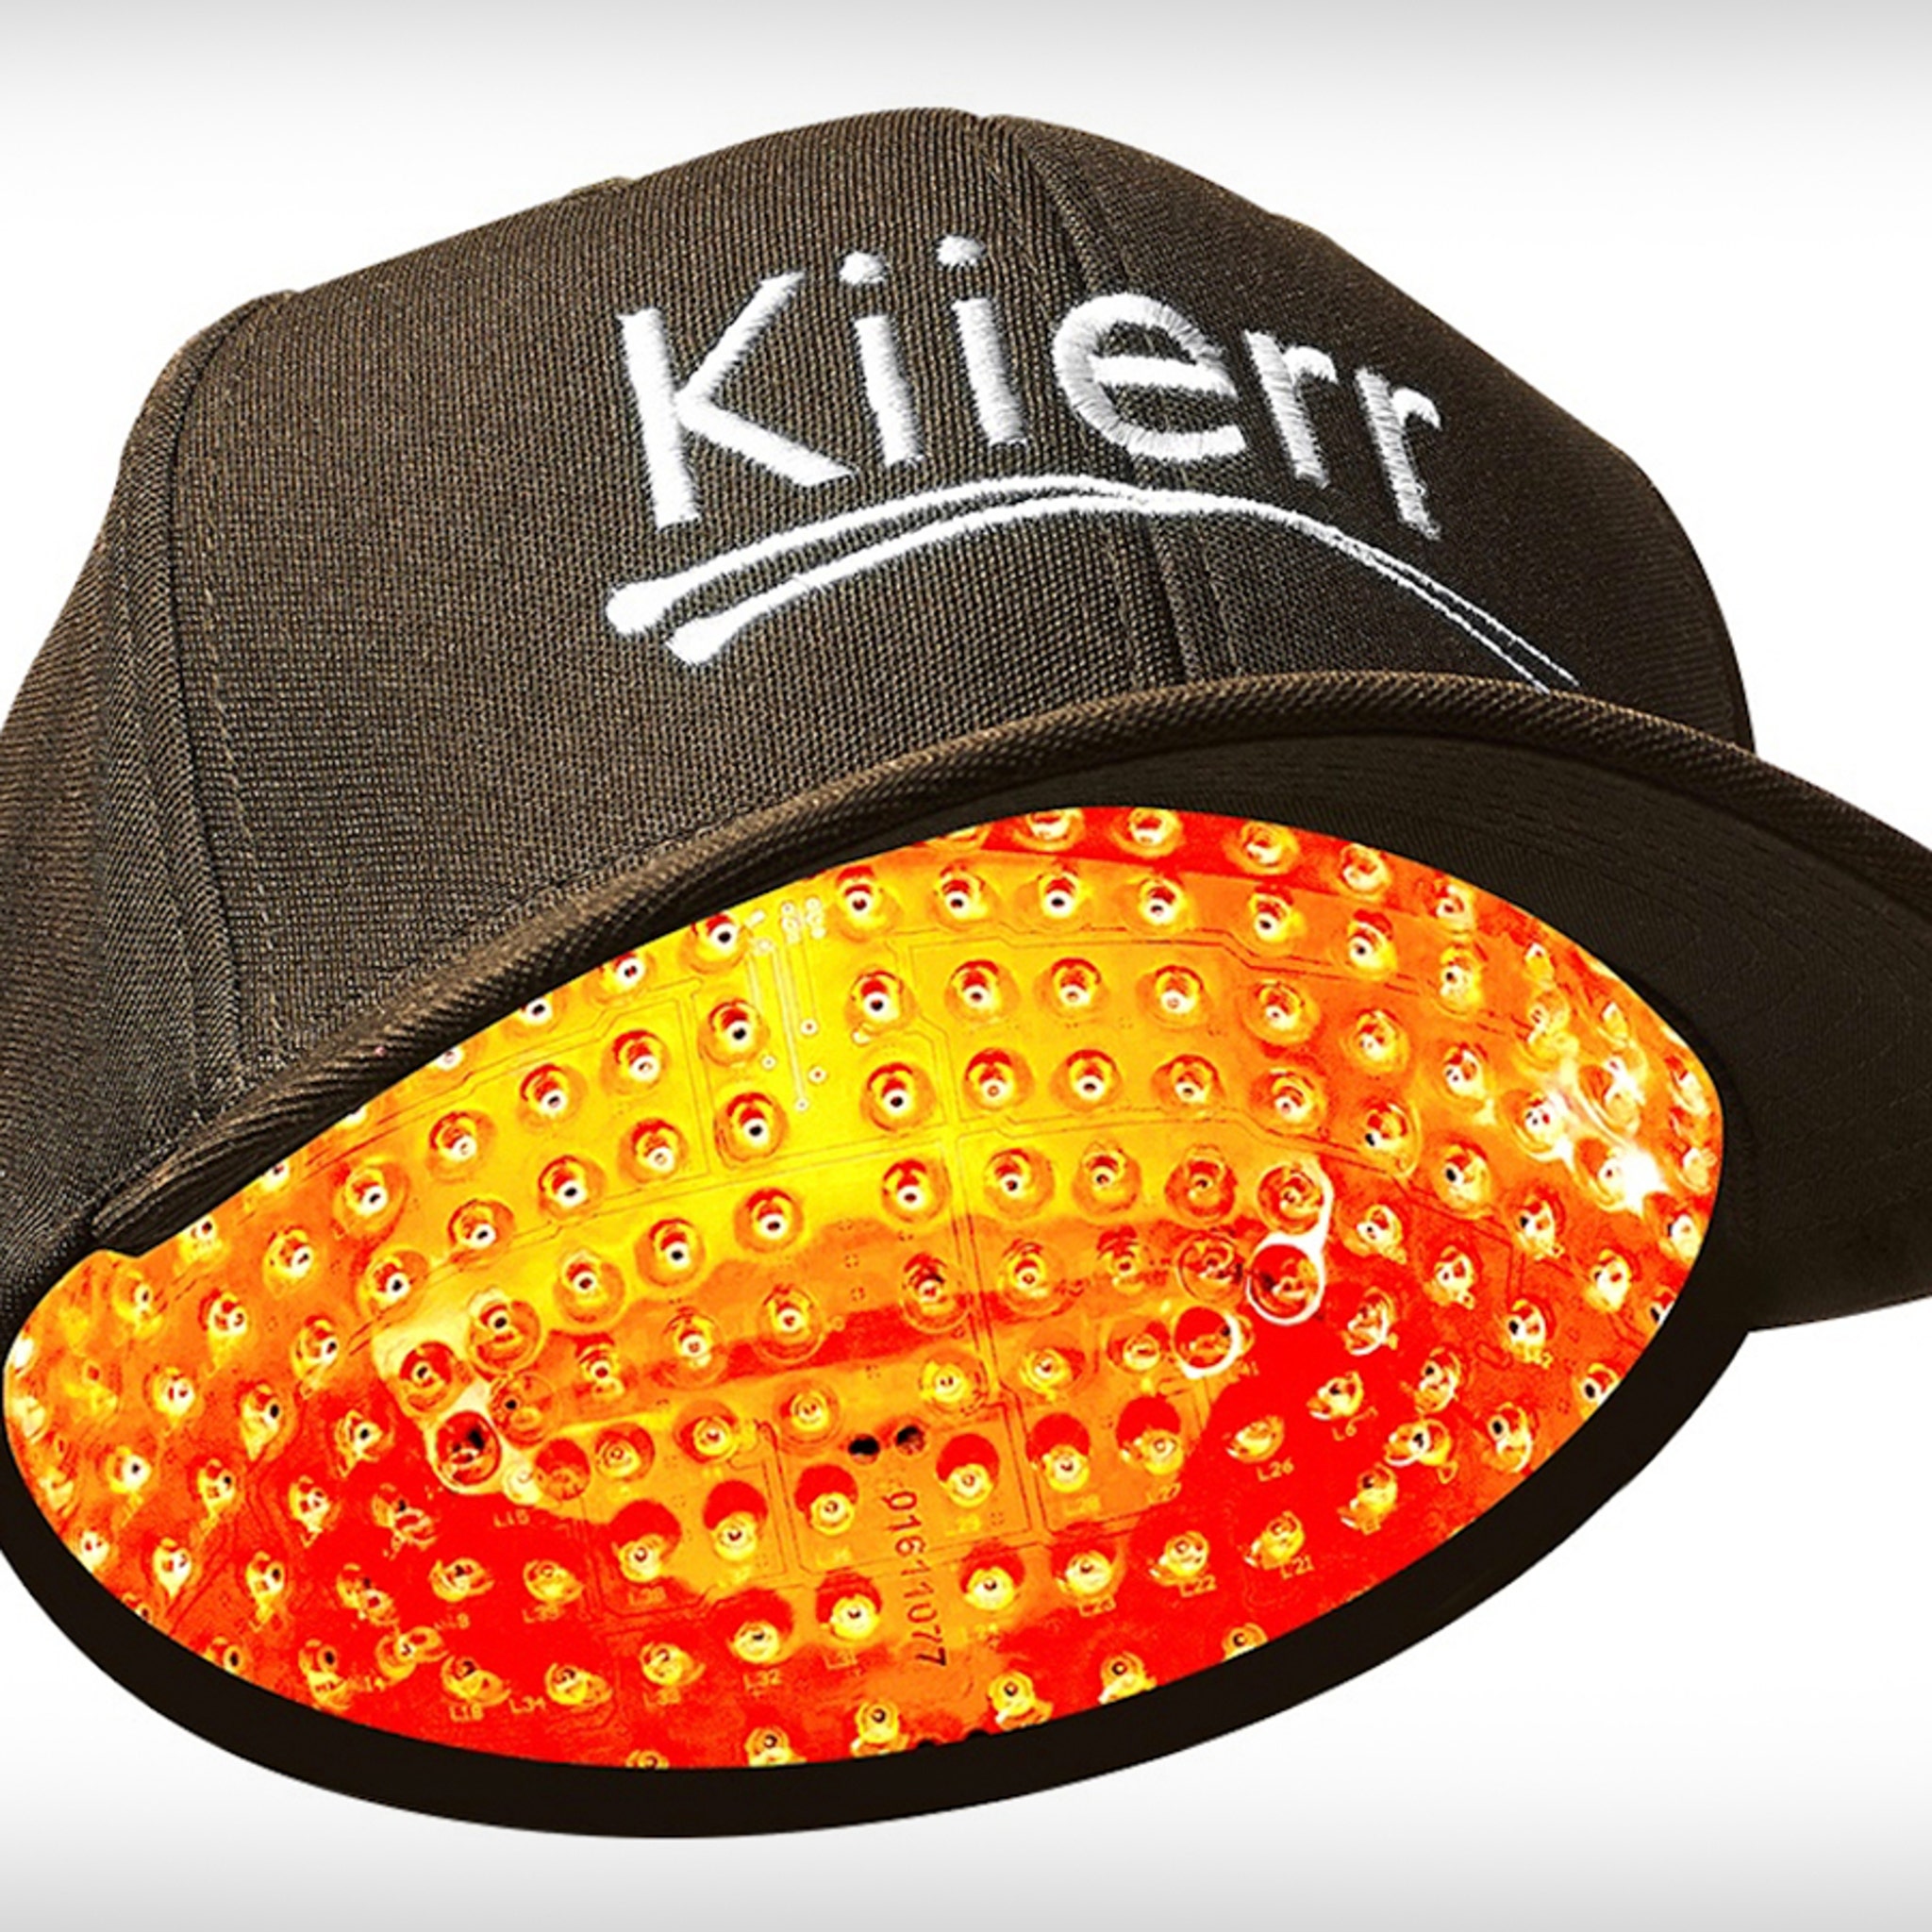 The Kiierr Laser Cap Is 93 Percent Effective At Regrowing Hair